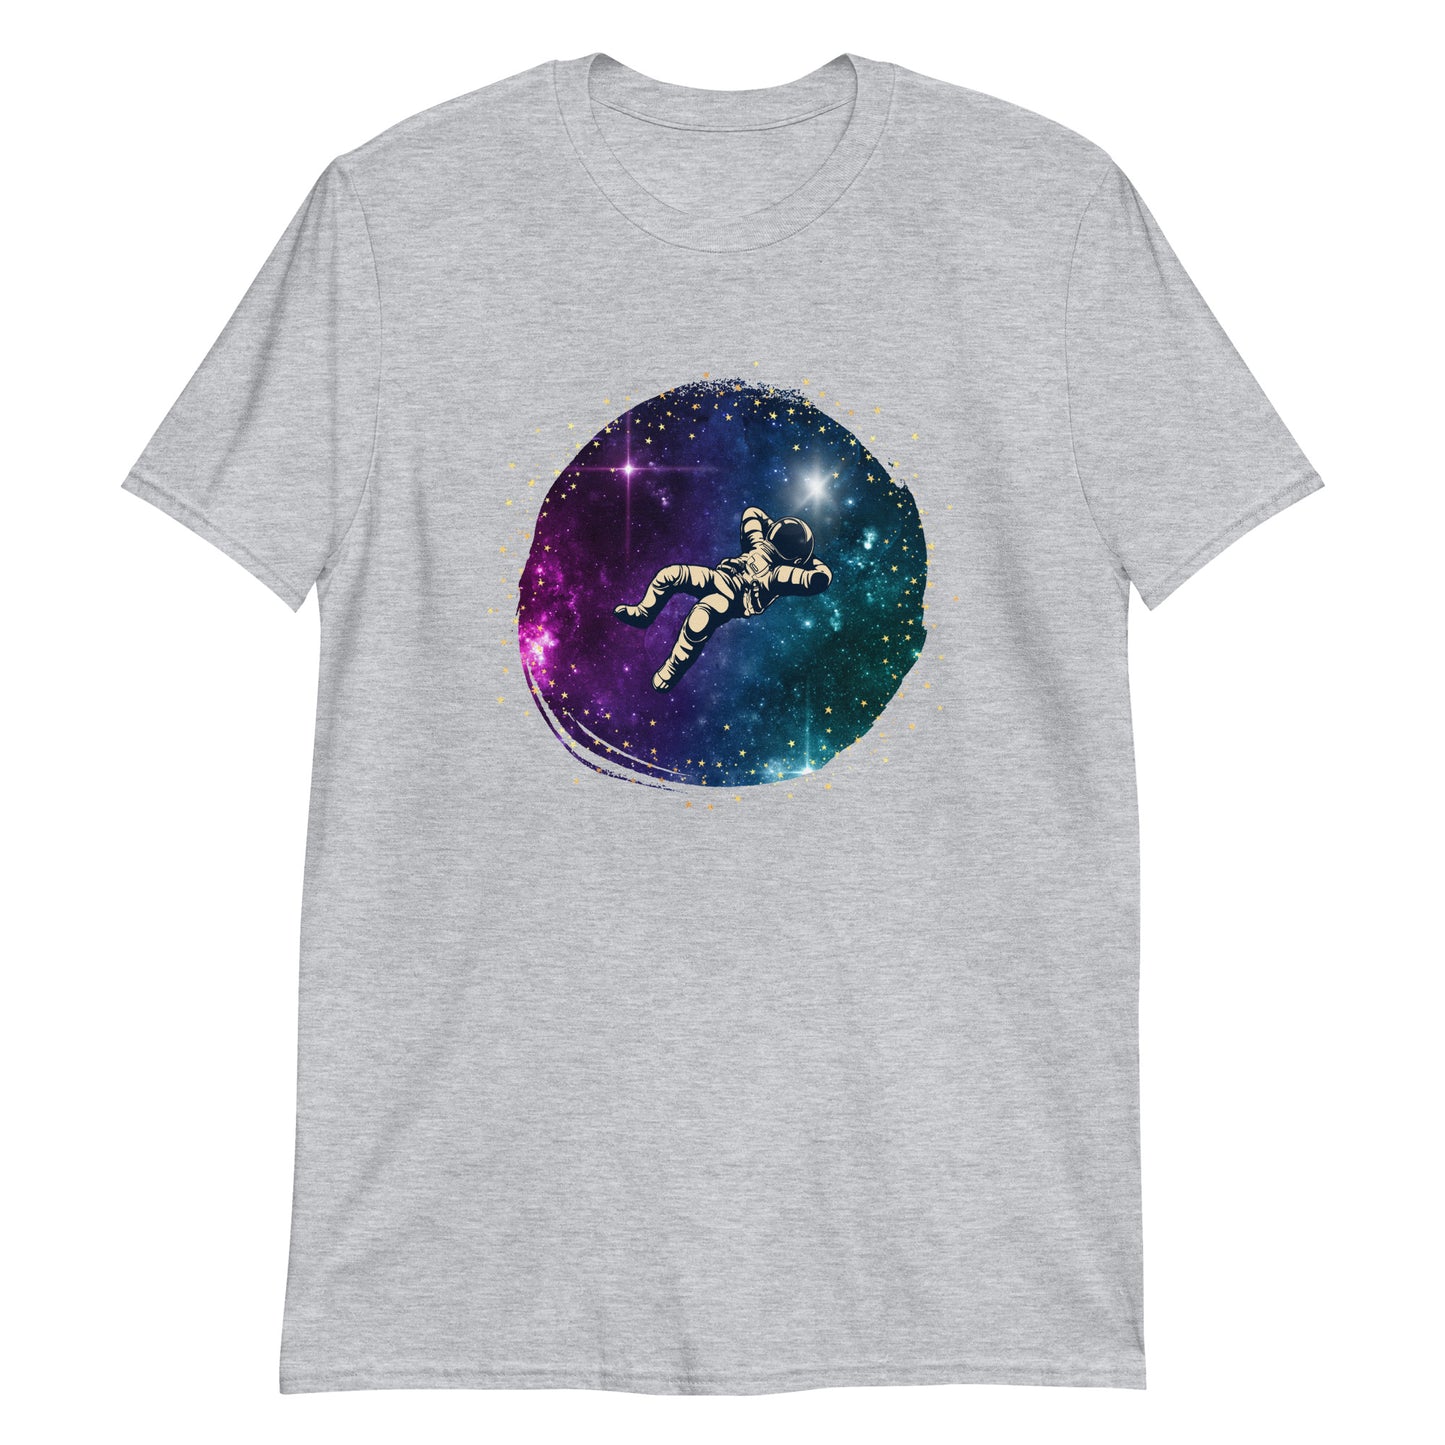 Spaceman - Short-Sleeve Unisex T-Shirt Sport Grey Unisex T-shirt Space